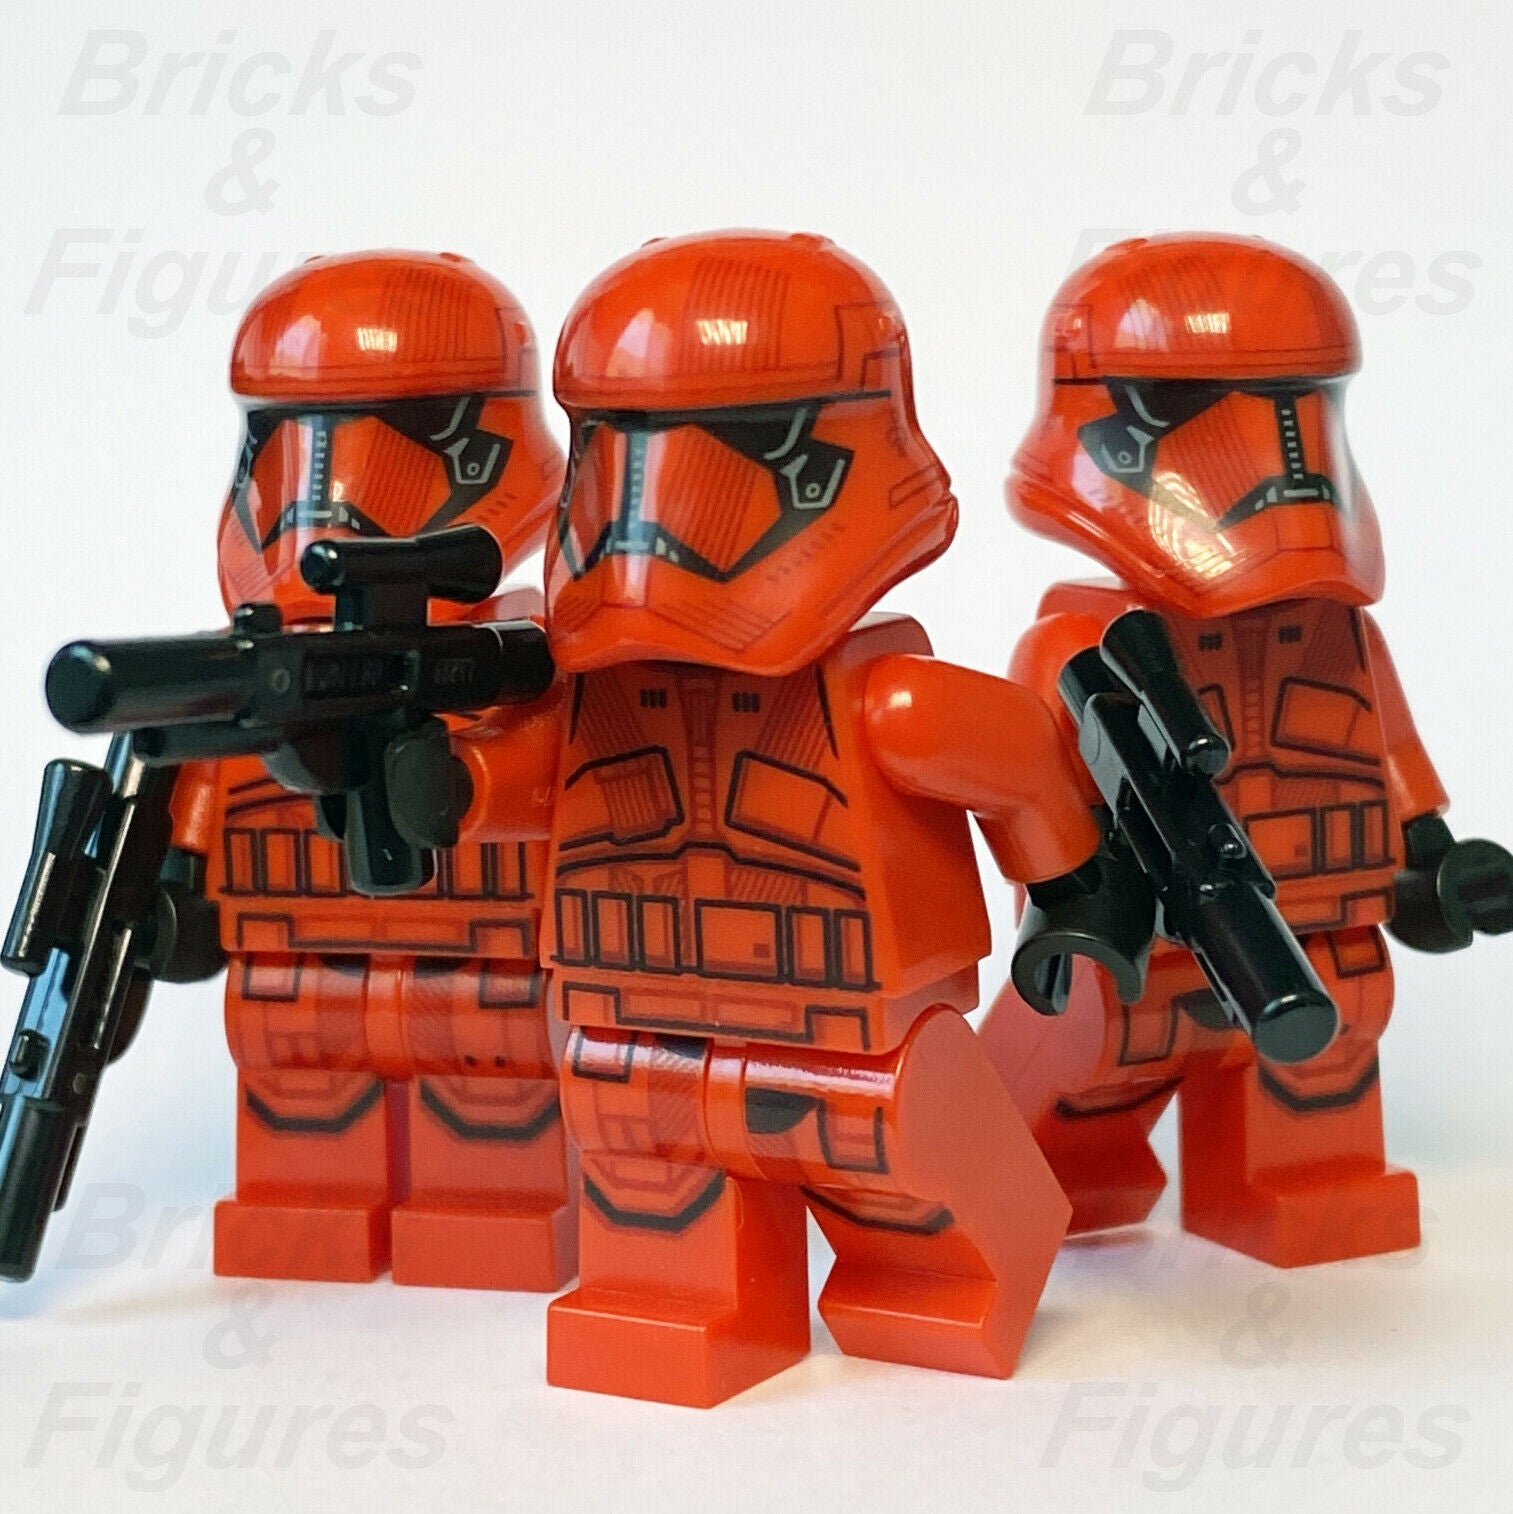 3 x New Star Wars LEGO Sith Trooper Final Order Minifigure from set 75256 75266 - Bricks & Figures